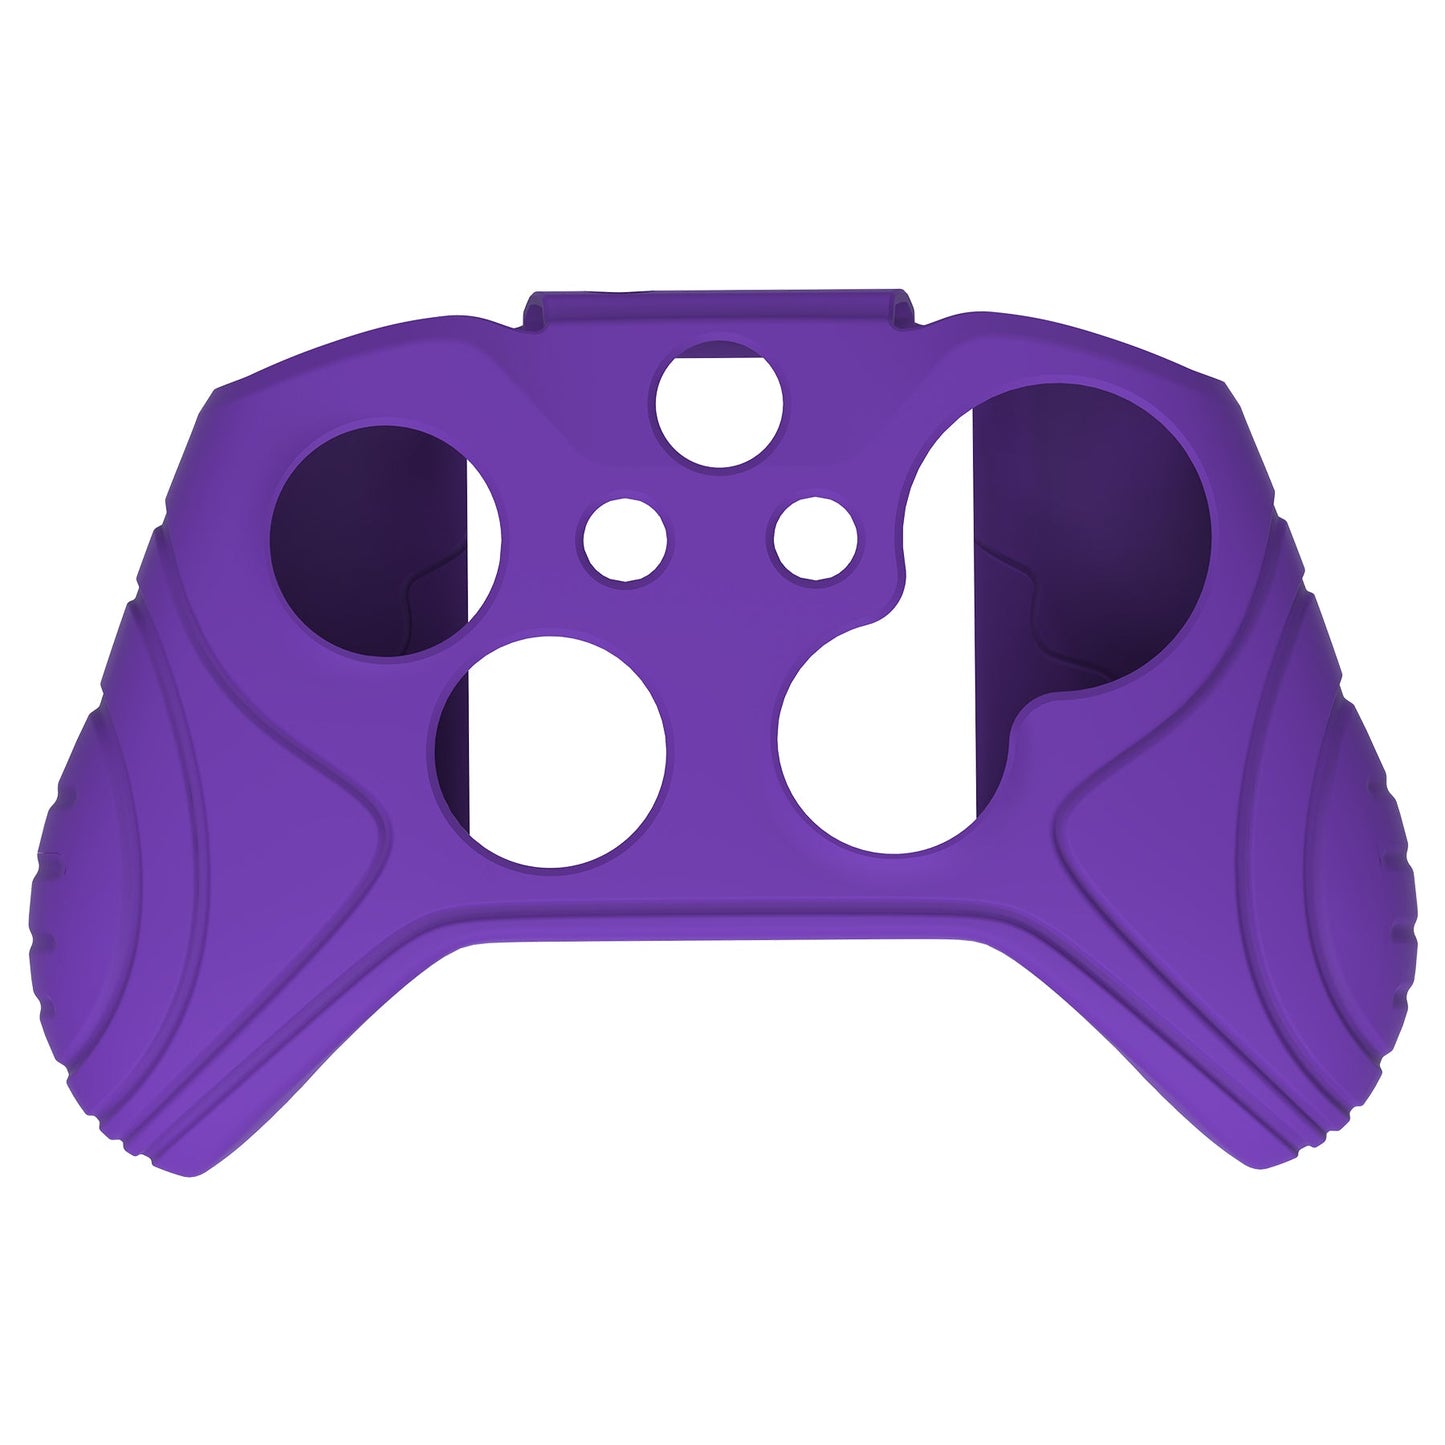 PlayVital Samurai Edition Purple Anti-Slip Controller Grip Silicone Skin for Xbox One X/S Controller, Ergonomic Soft Rubber Protective Case Cover for Xbox One S/X Controller with Black Thumb Stick Caps - XOQ038 playvital